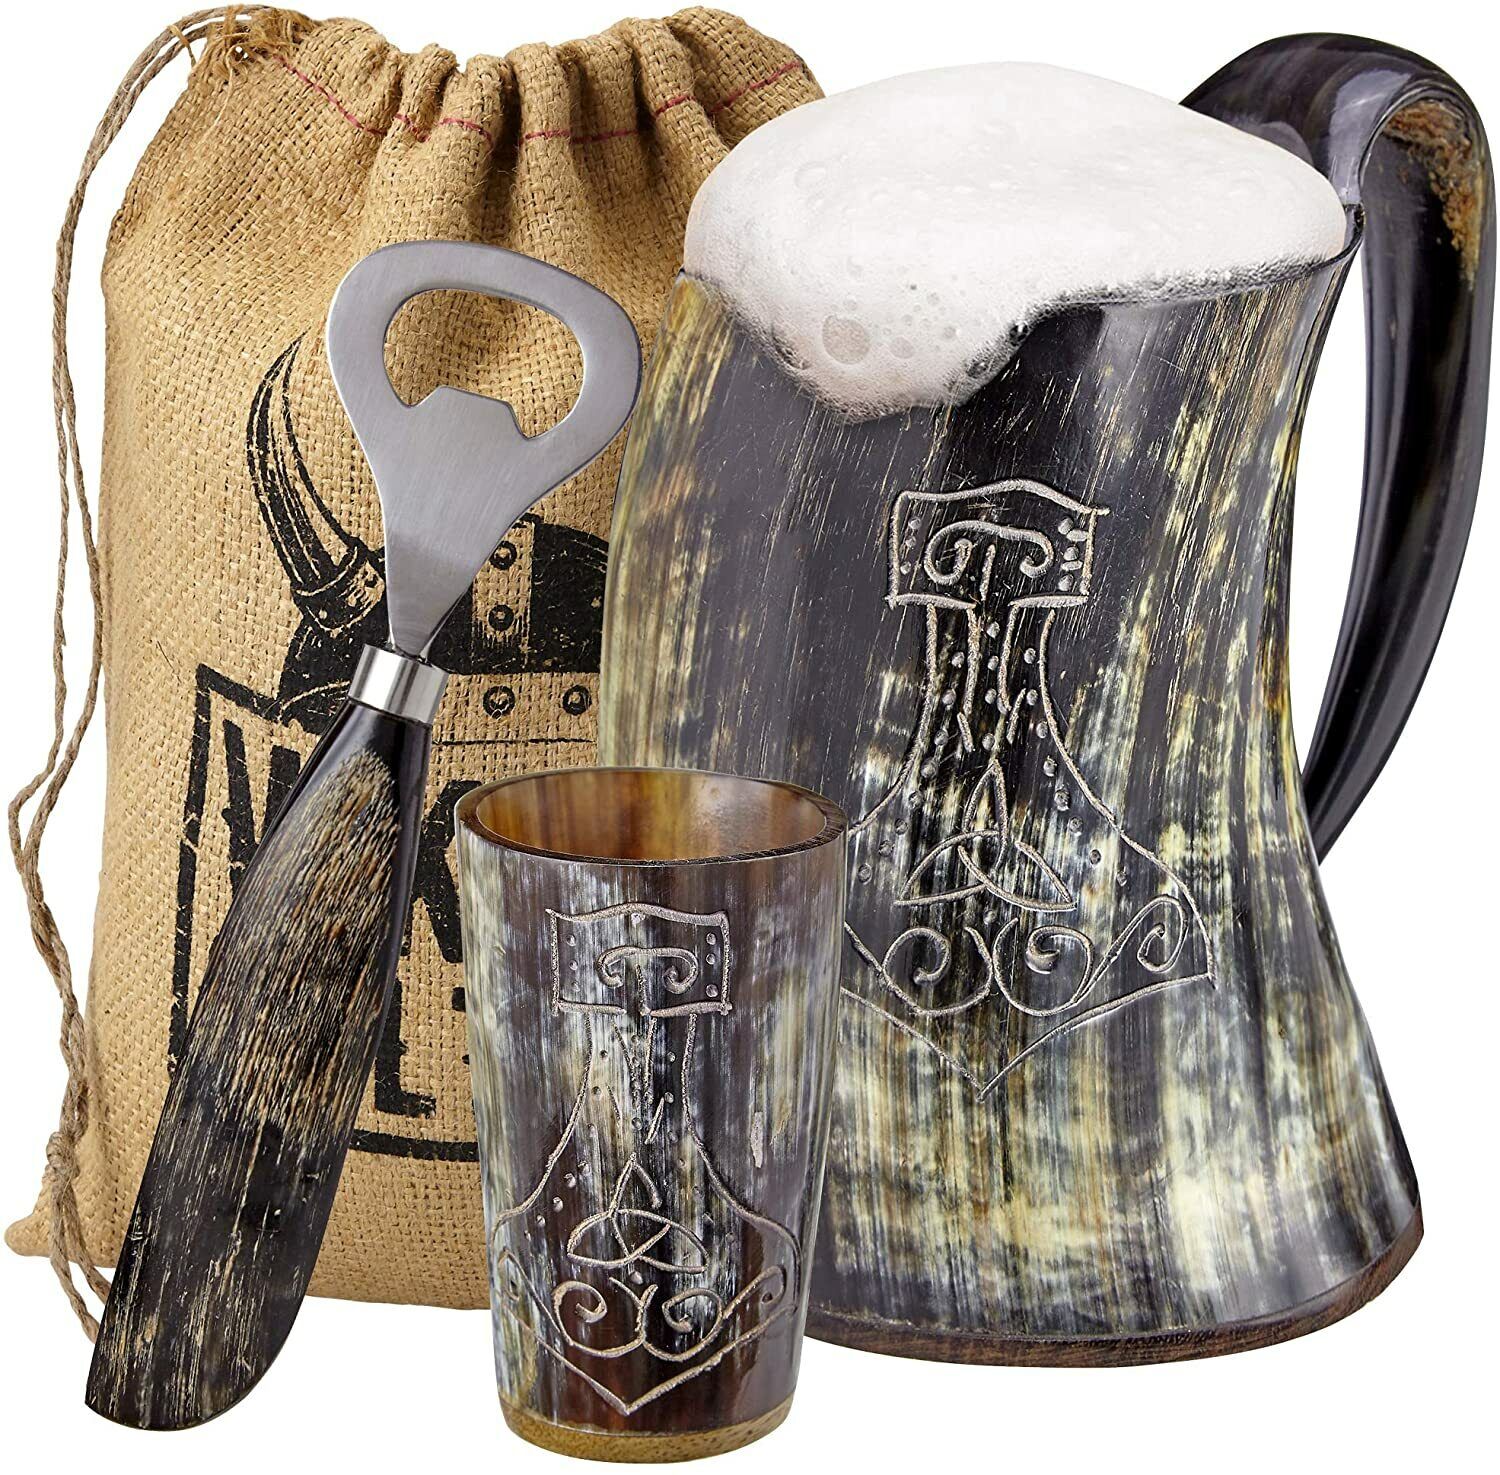 Viking Culture Ox Horn Mug, Shot Glass,and Bottle Opener 3 pic set  Thors Hammer